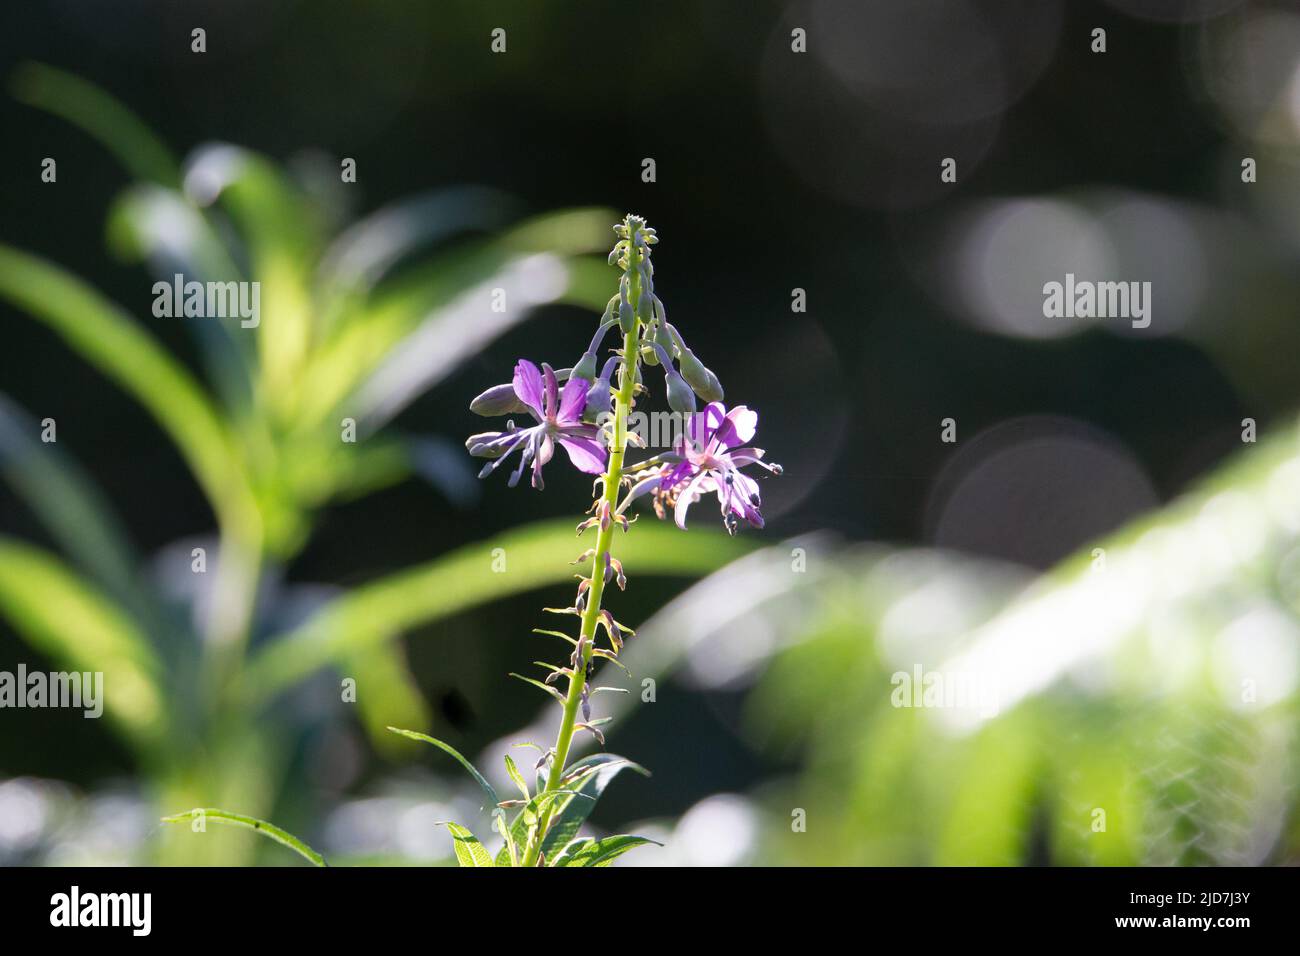 isolated single flowering stem of Rosebay willowherb (Chamerion angustifolium) Stock Photo